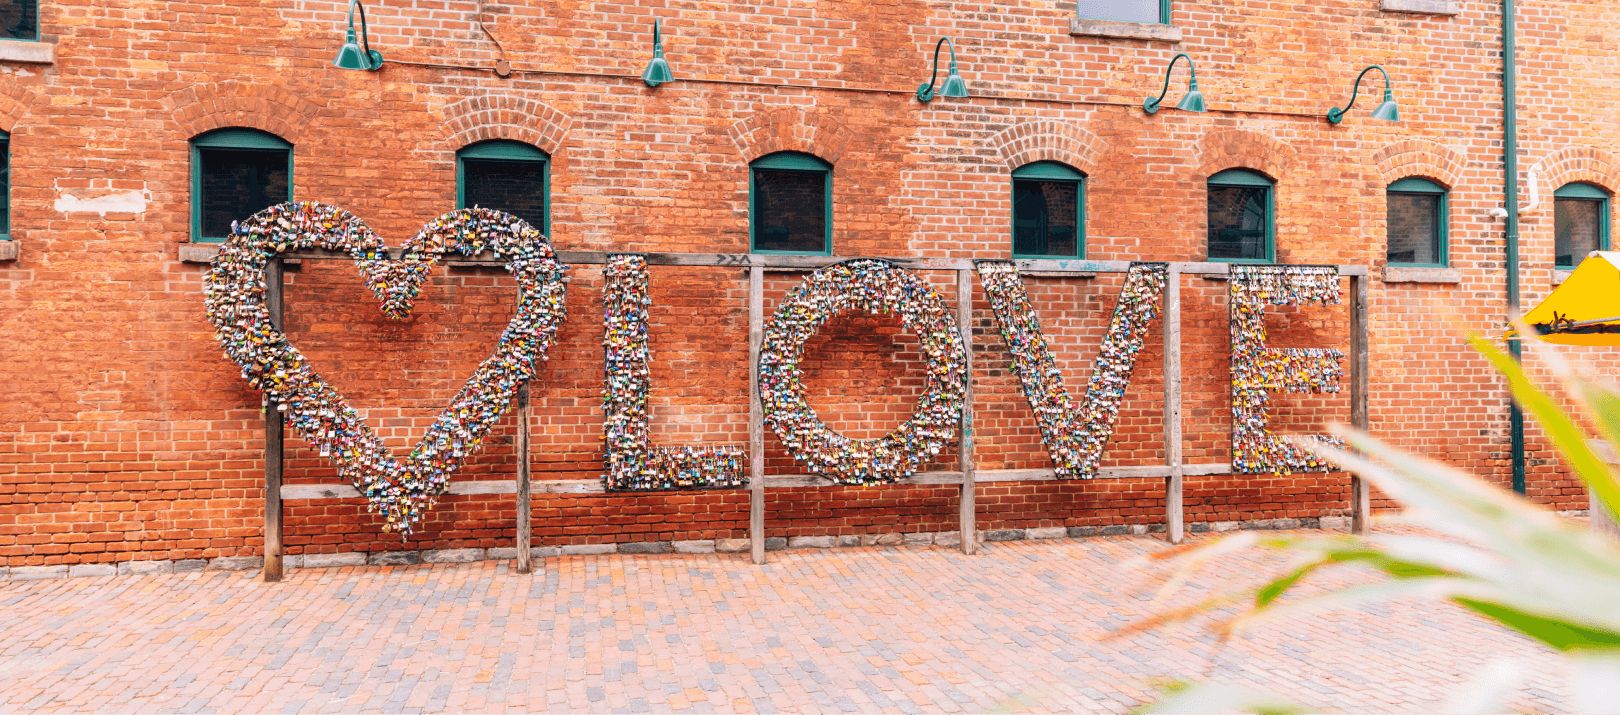 Brick toronto sign that says love